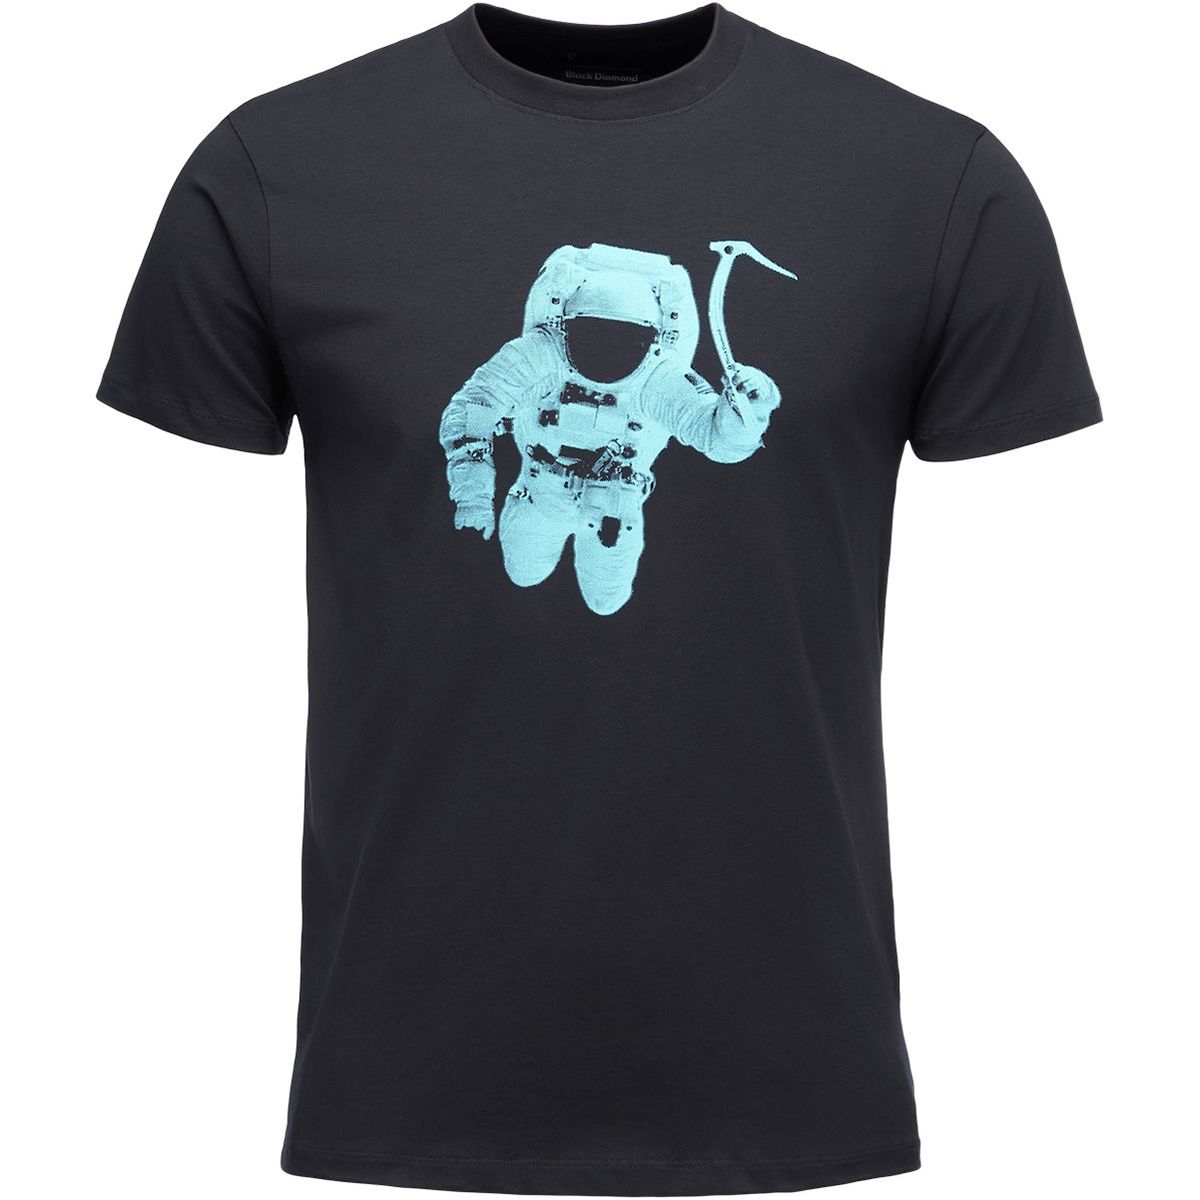 Black Diamond Spaceshot Short-Sleeve T-Shirt - Men's